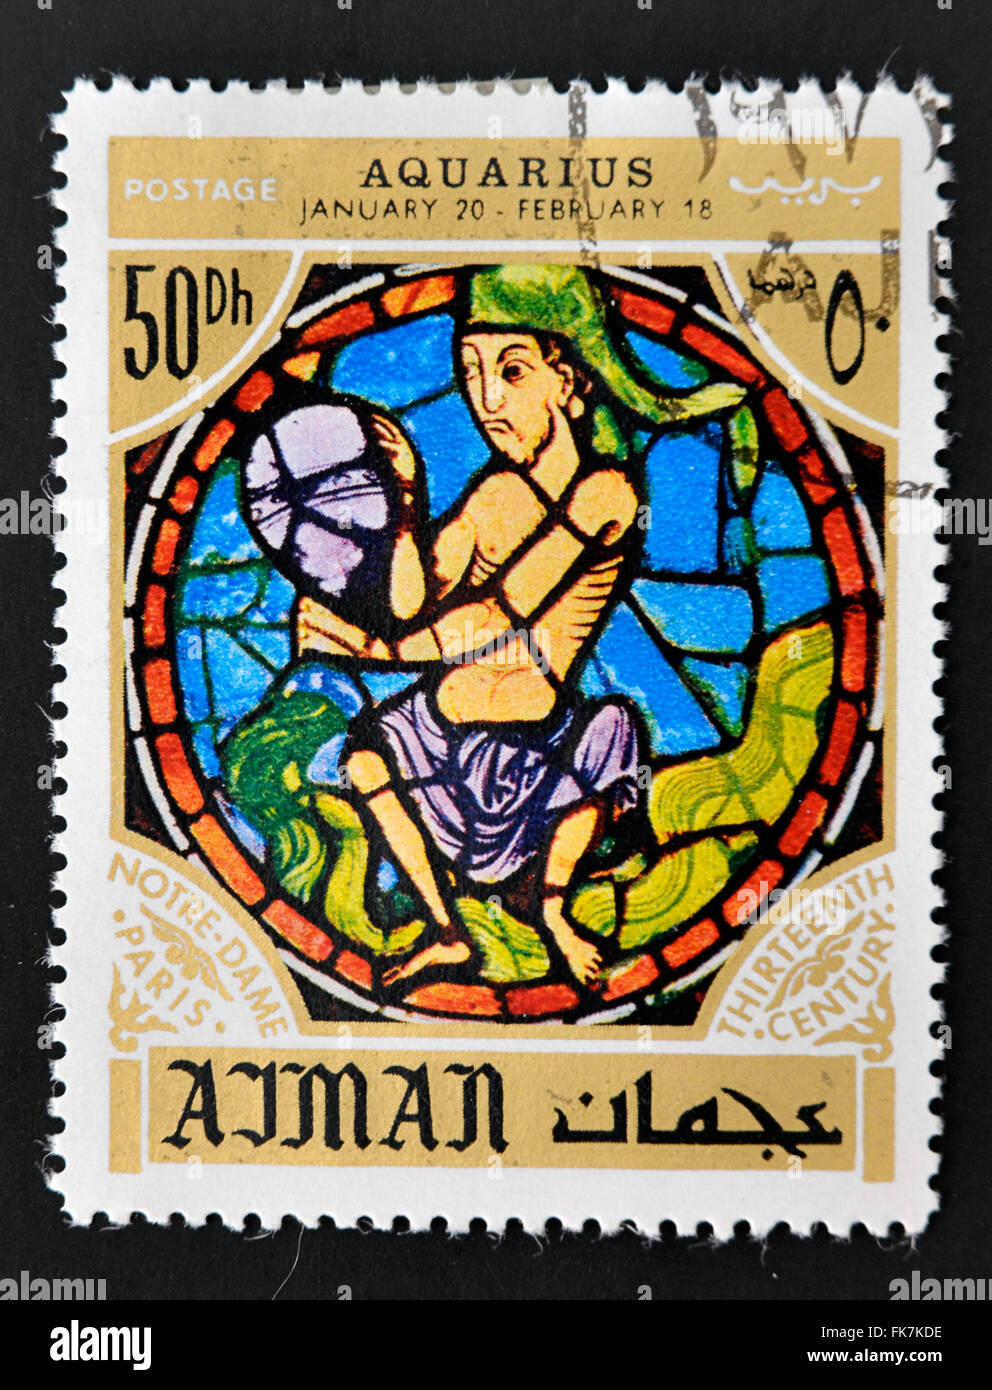 AJMAN - CIRCA 1971: A stamp printed in Ajman shows the horoscope sign of Aquarius, Stock Photo